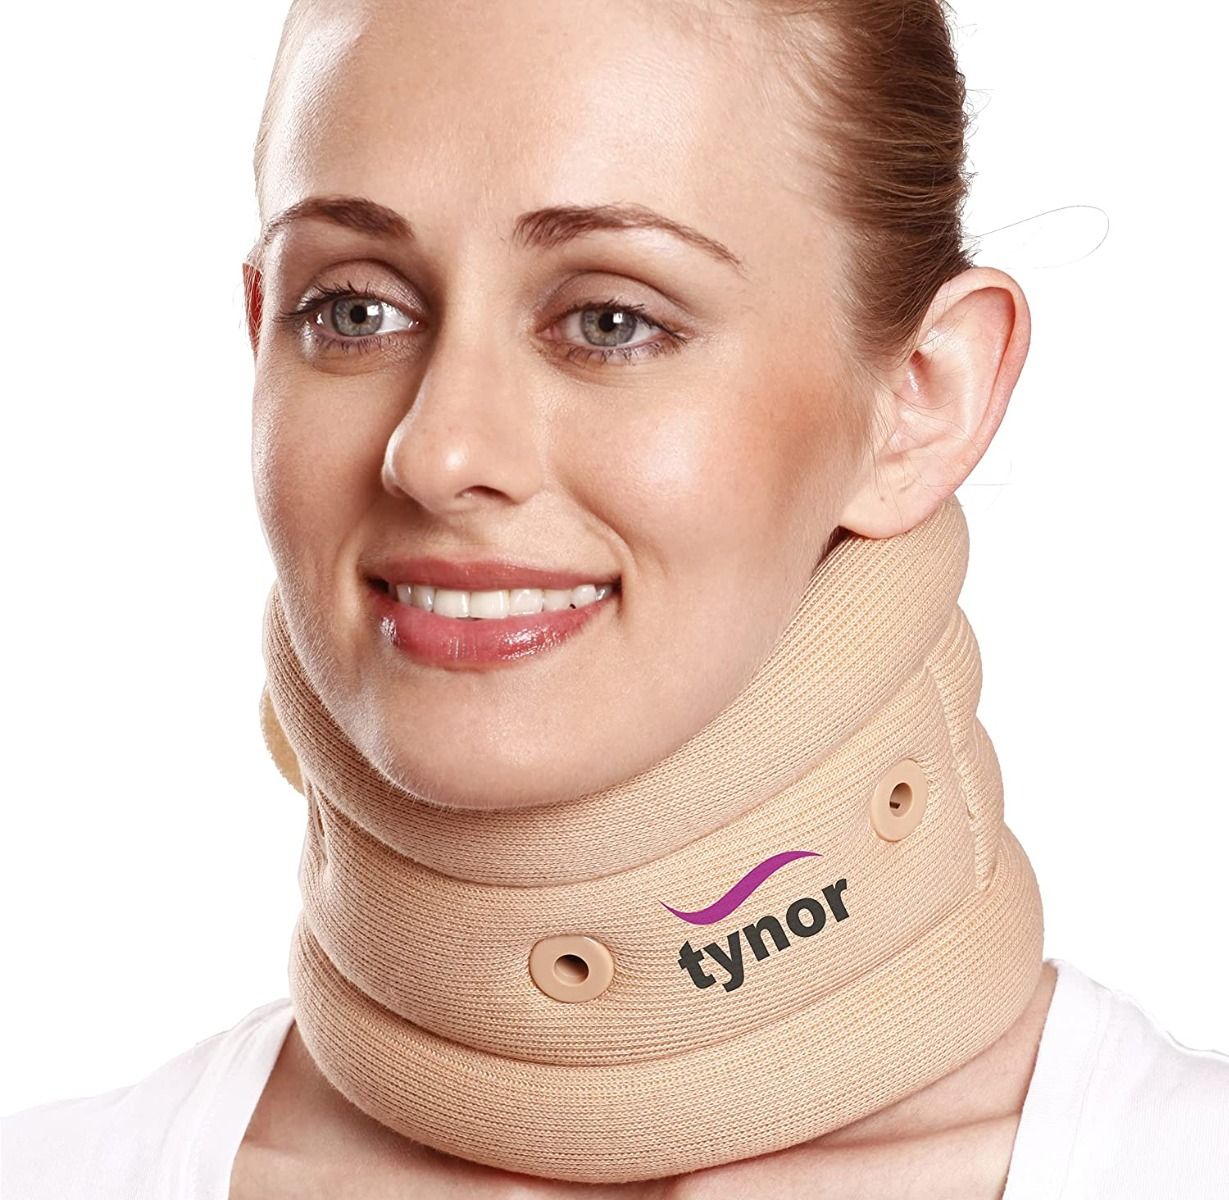 Buy Tynor Cervical Collar Soft Medium, 1 Count Online